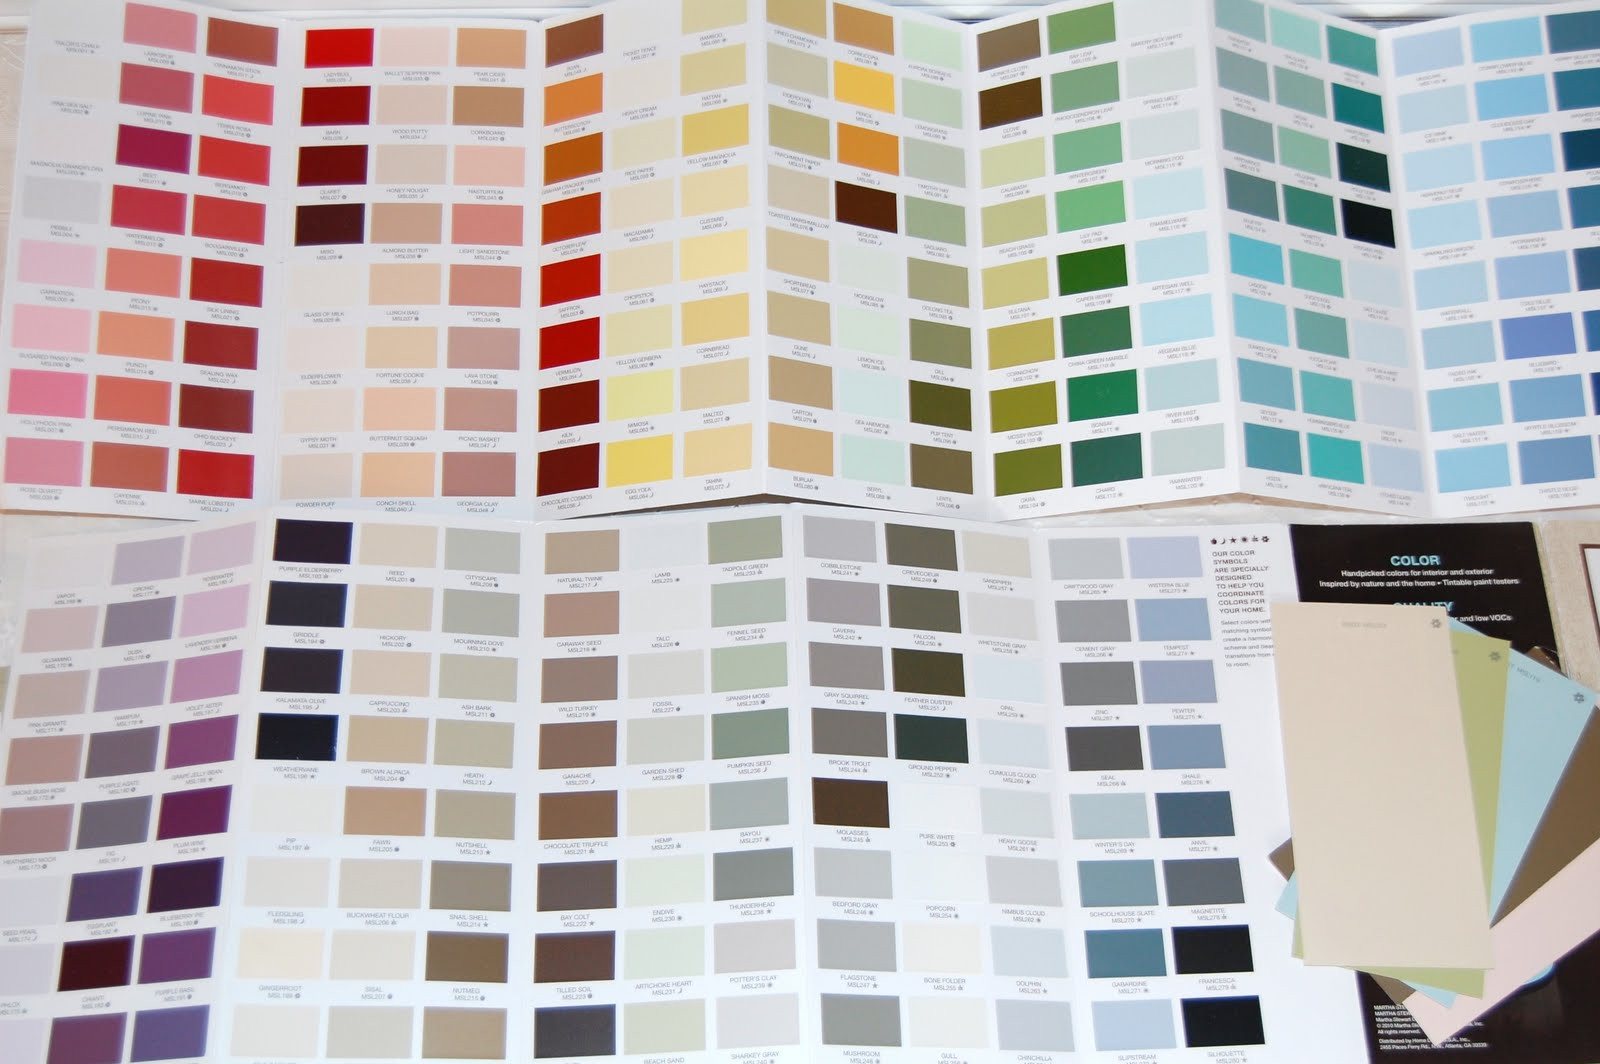 Best ideas about Home Depot Paint Colors
. Save or Pin Home Depot Paint Color Chart Now.